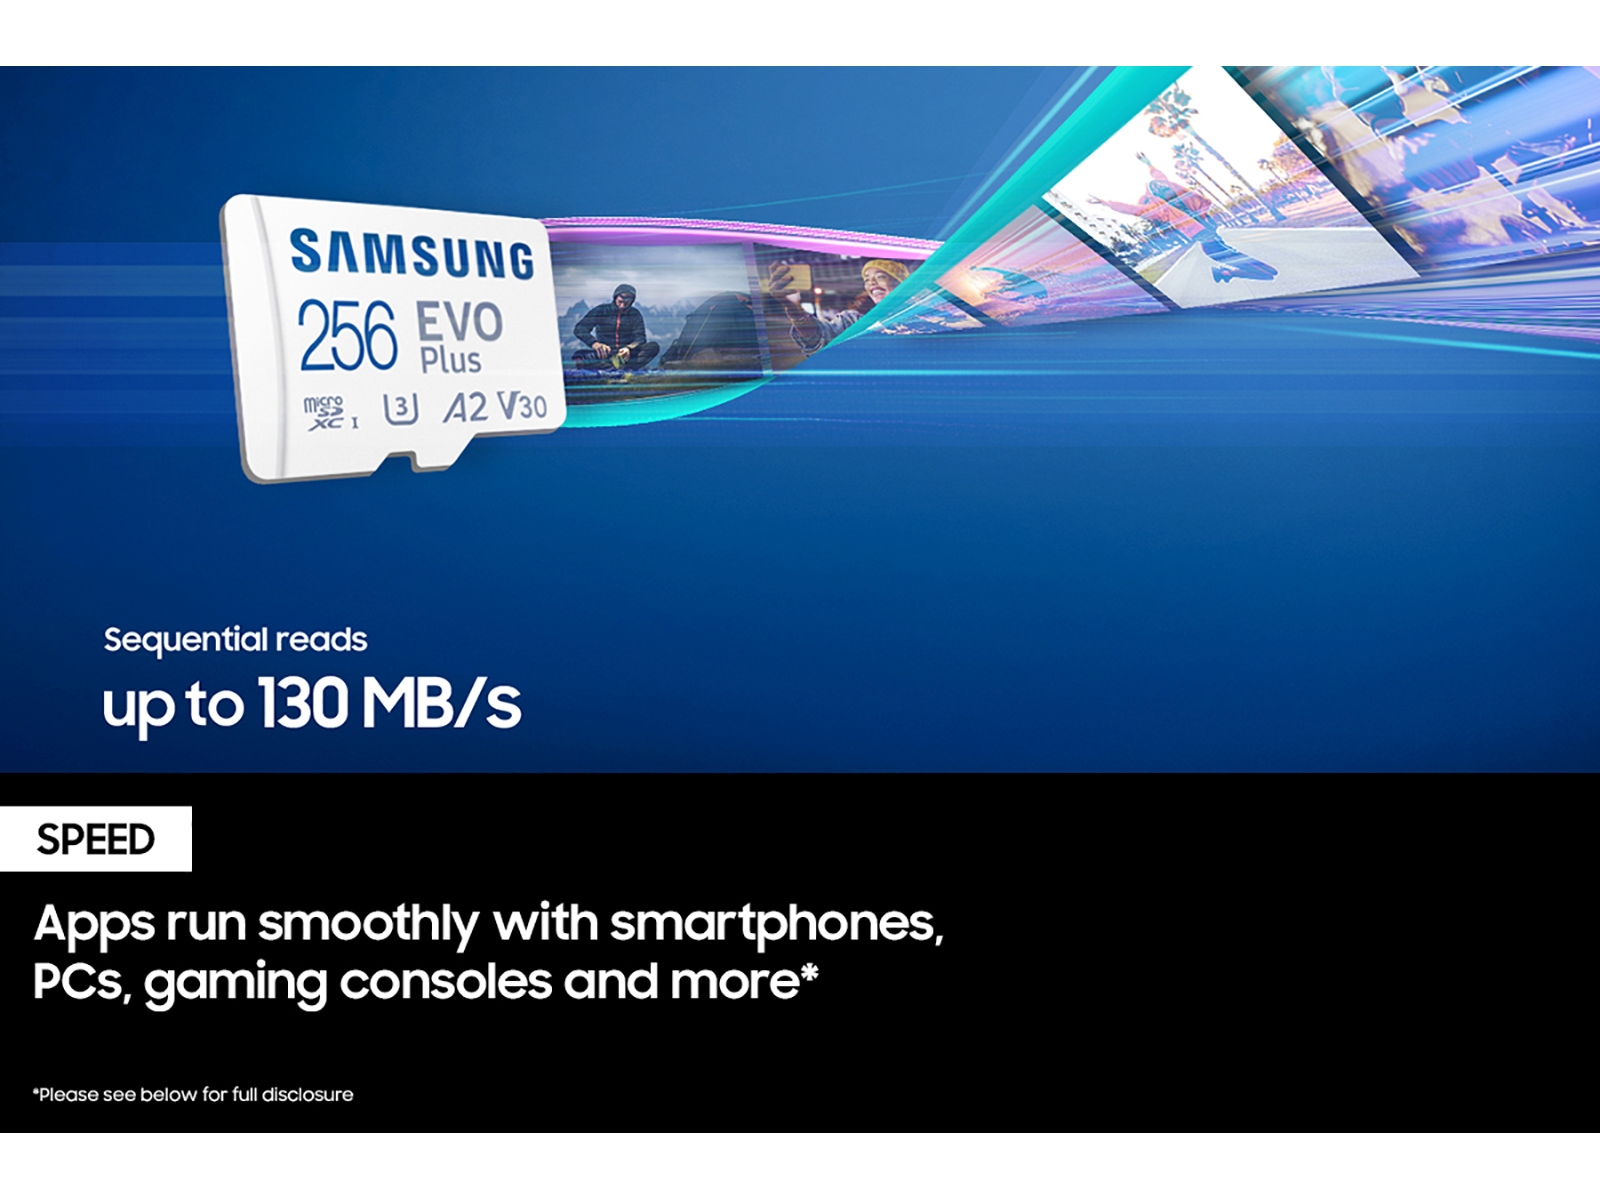 Samsung EVO Plus (2017) microSDXC 256 Go (MB-MC256GA) au meilleur